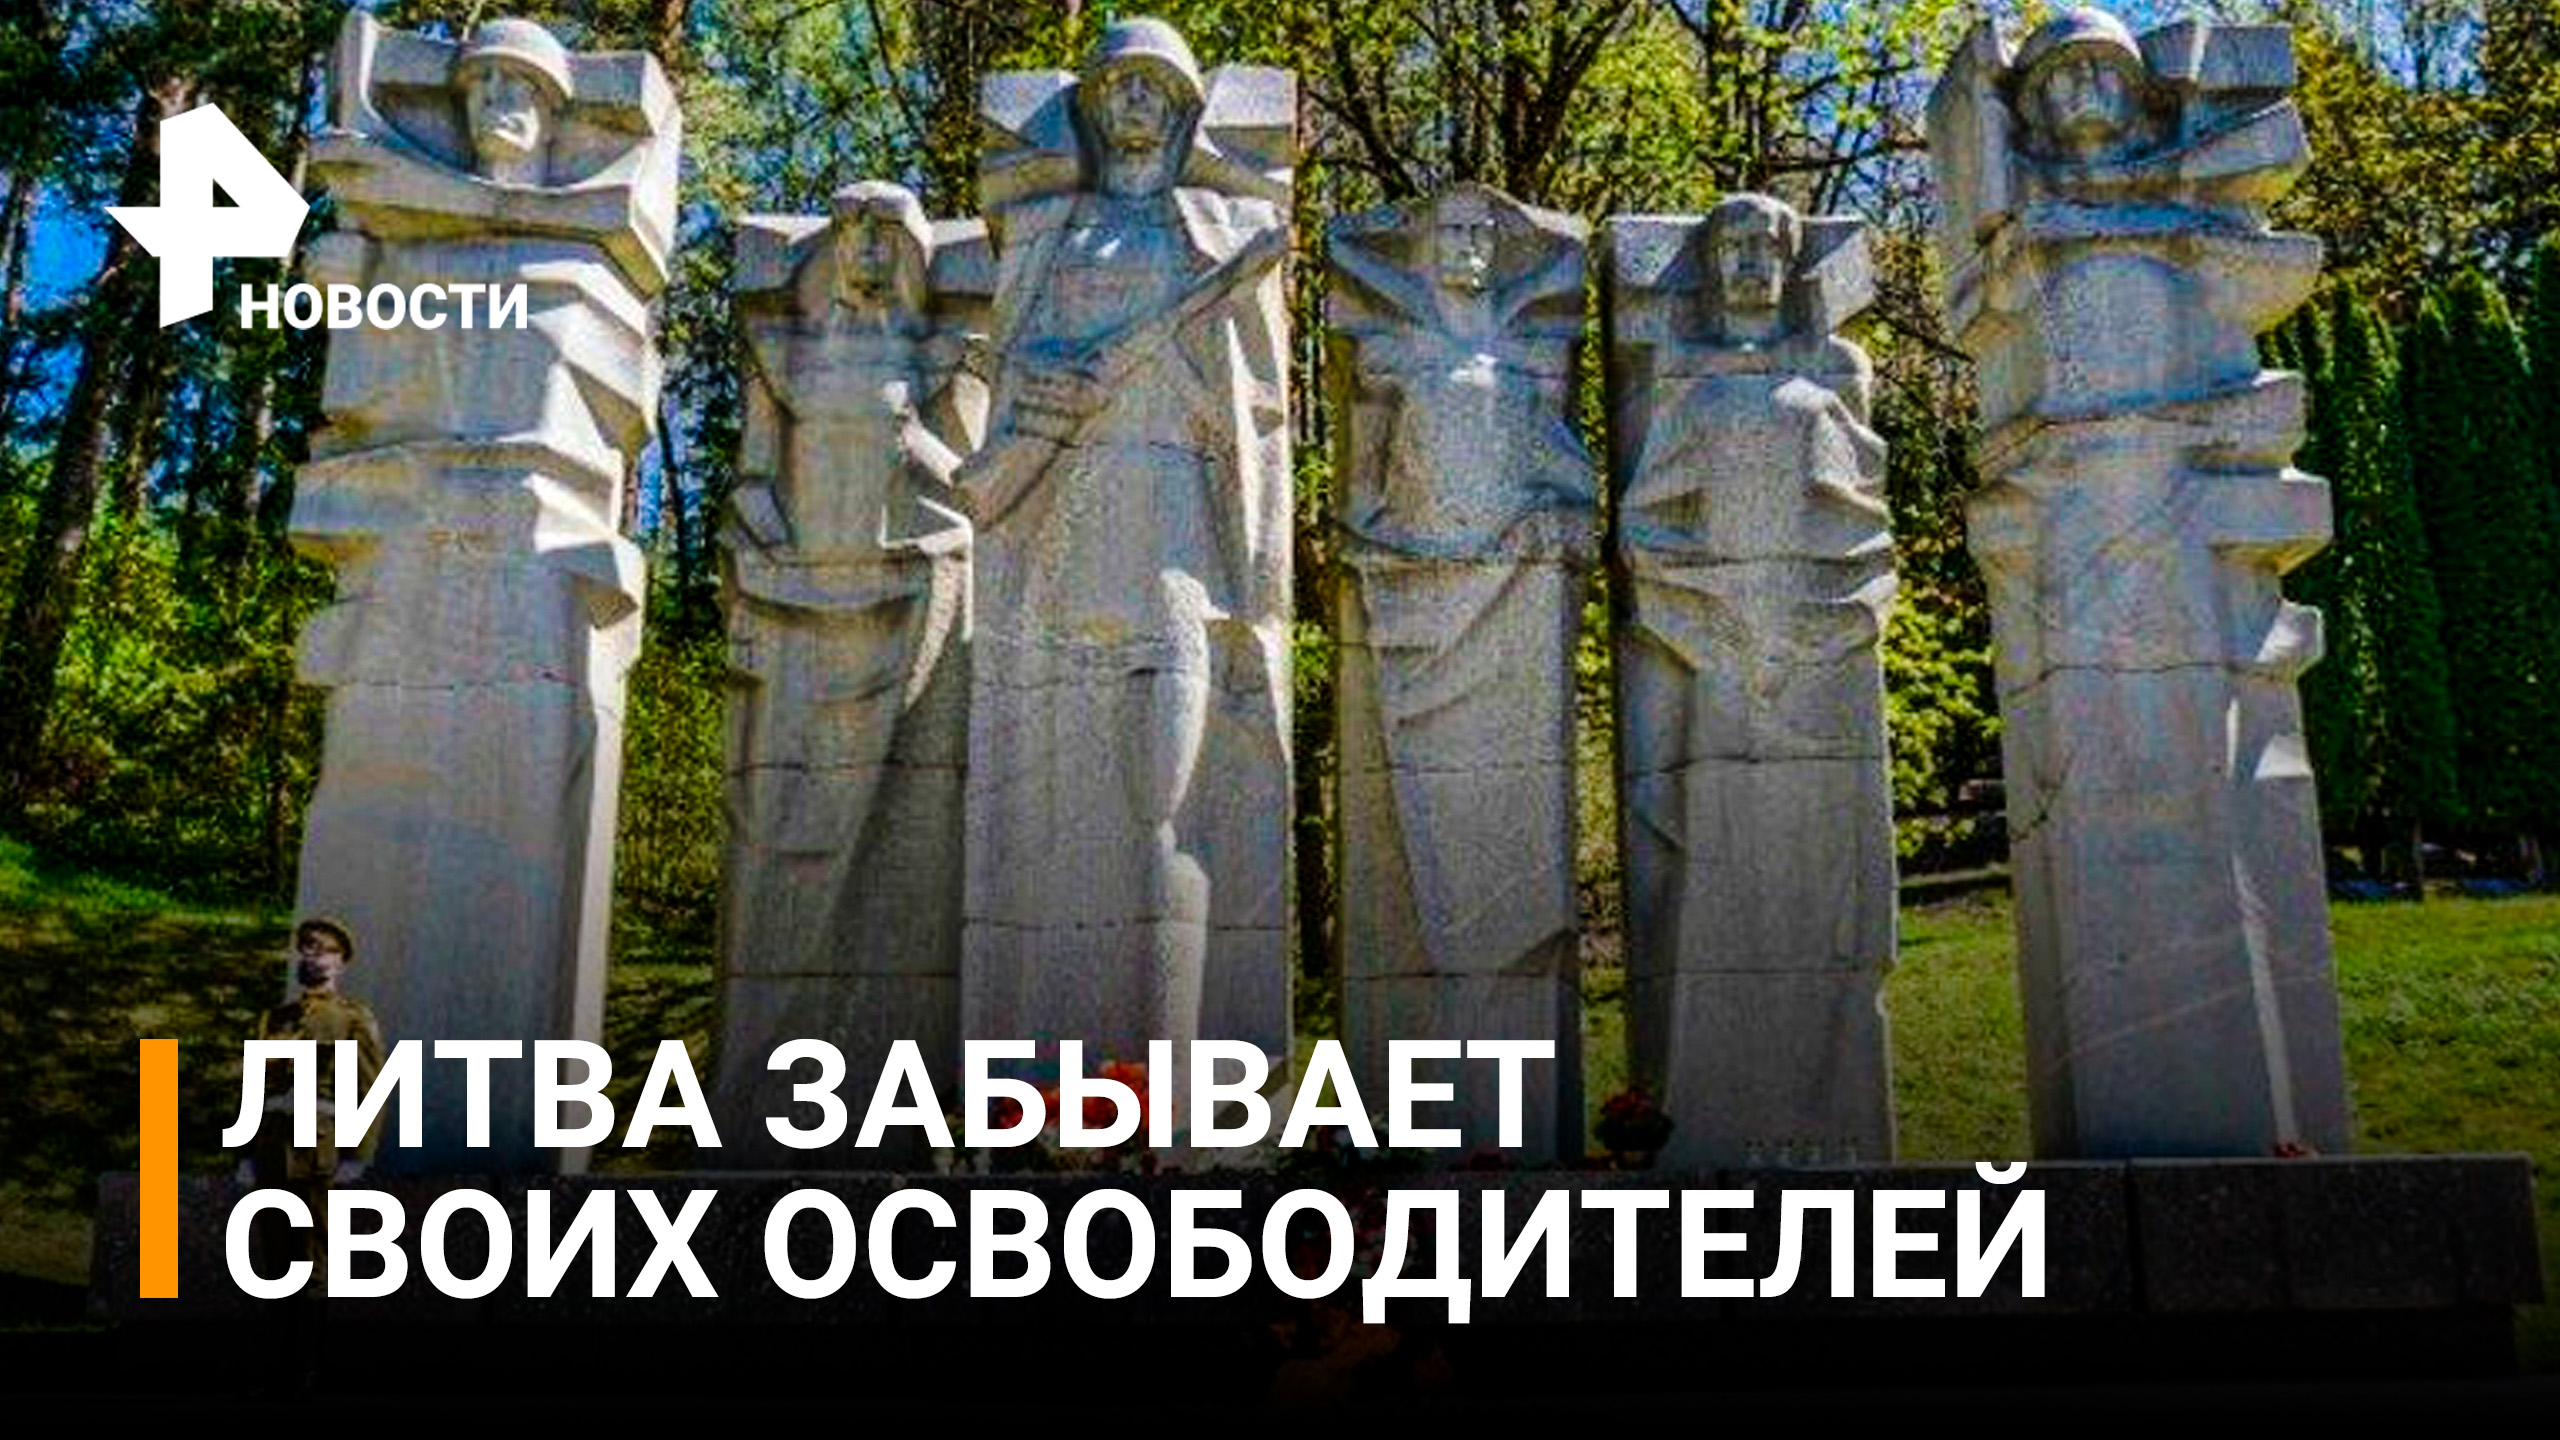 В Литве сносят памятник советским воинам / РЕН Новости